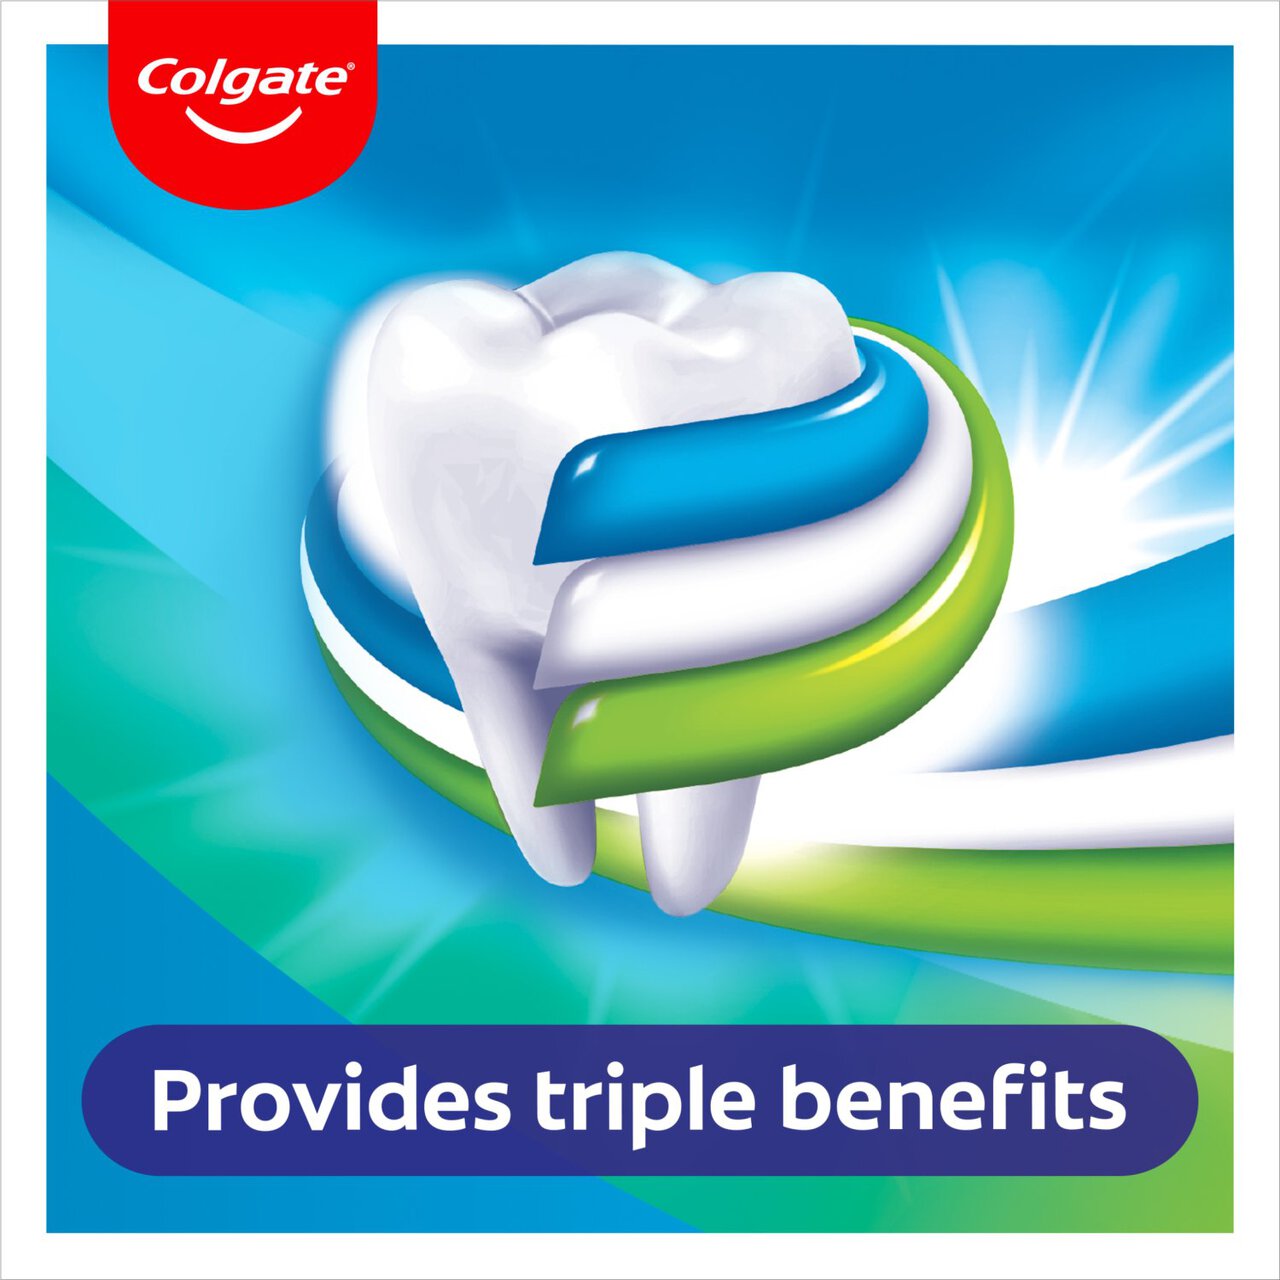 Colgate Triple Action Toothpaste 75ml